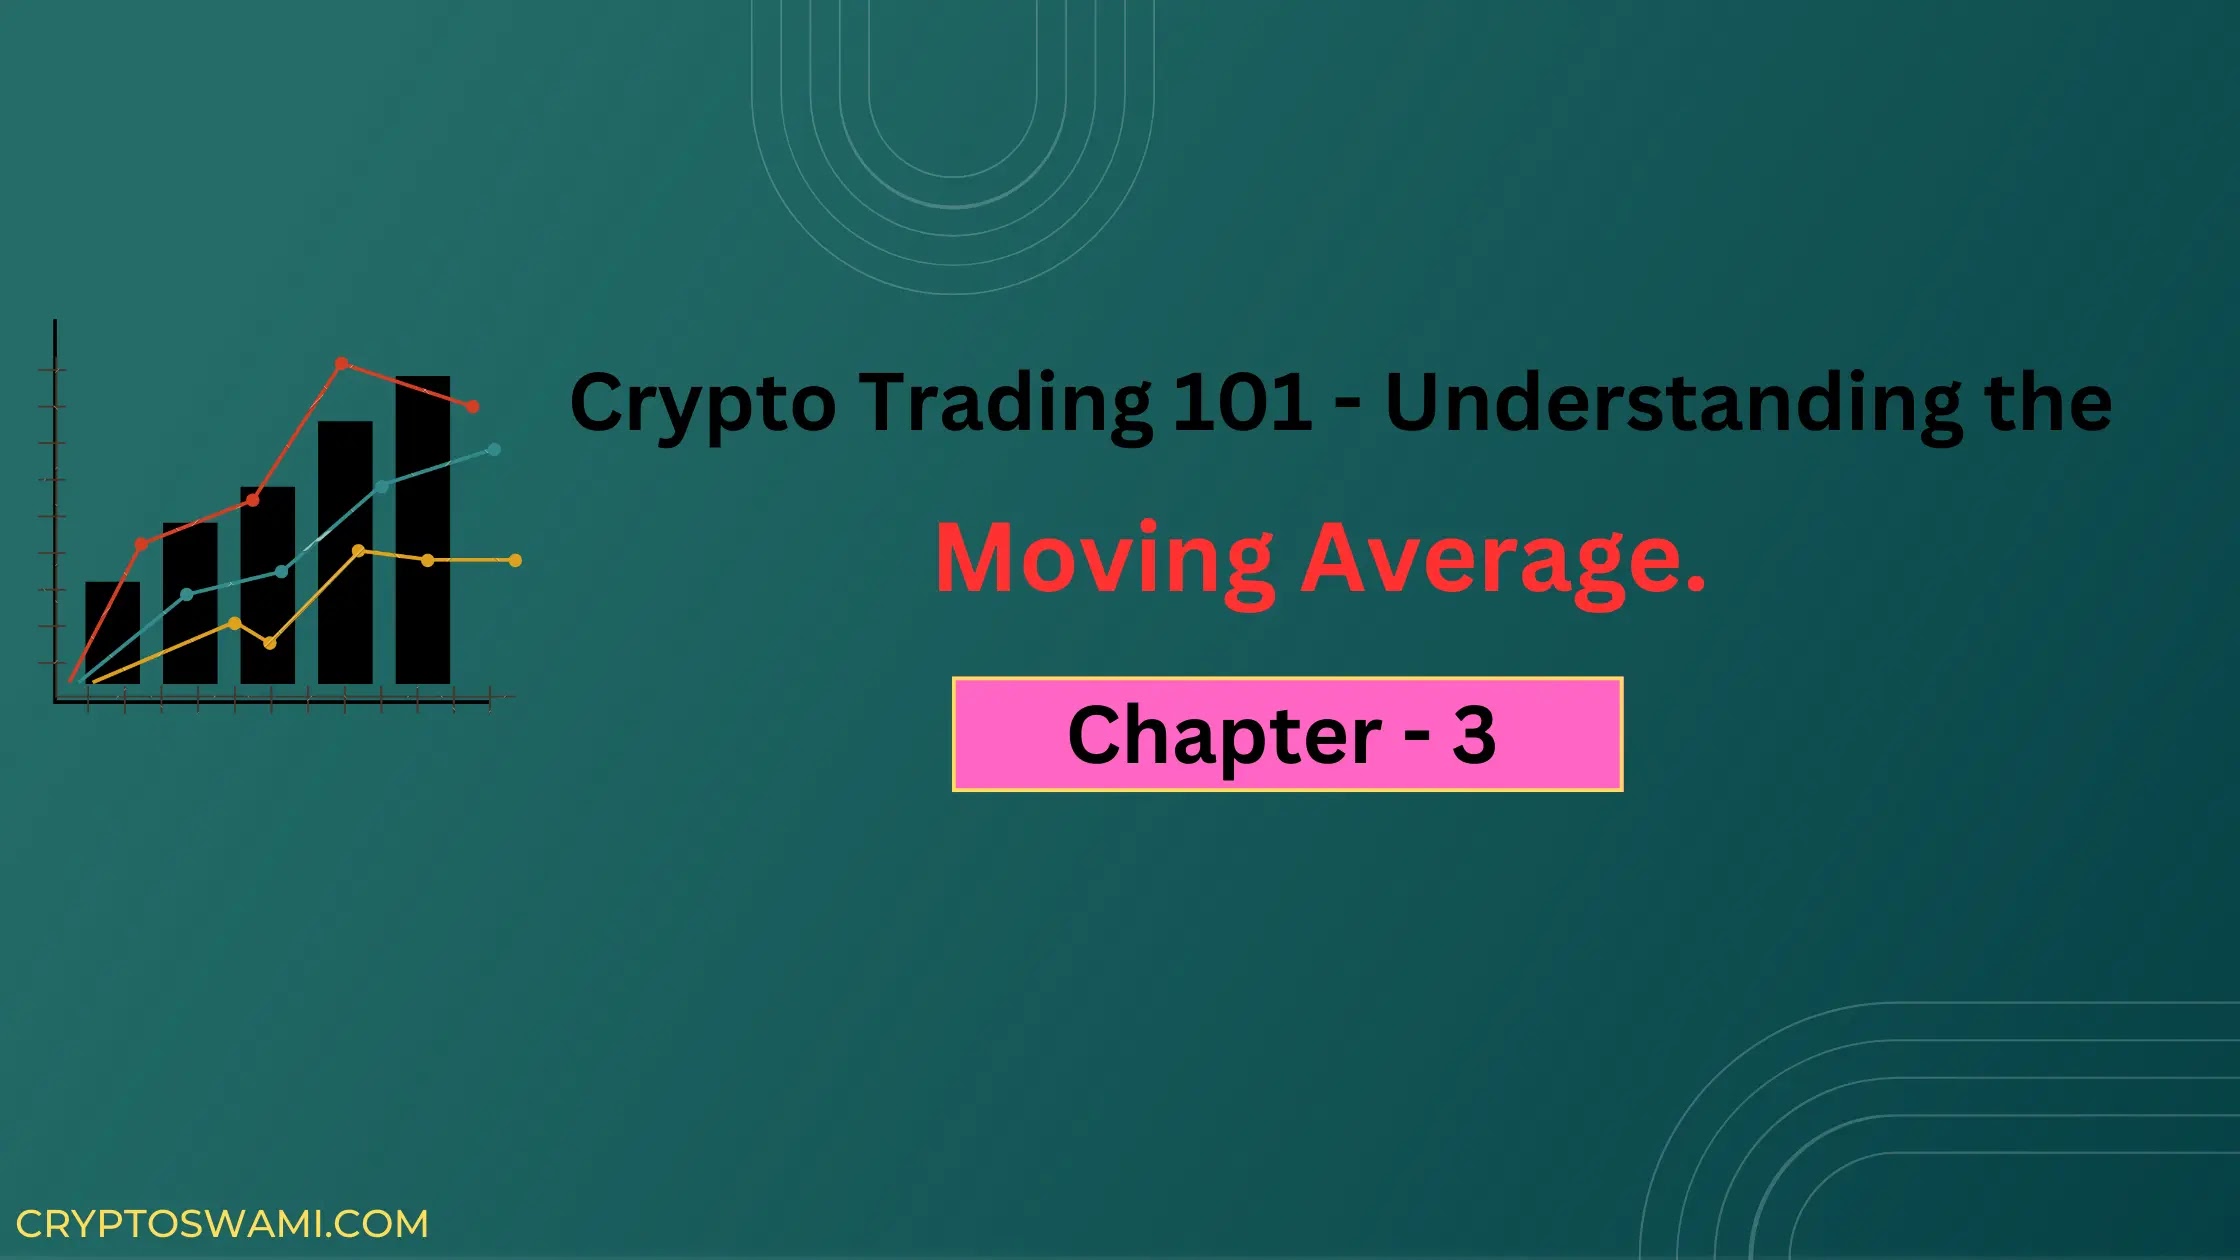 moving average, MA, crypto trading